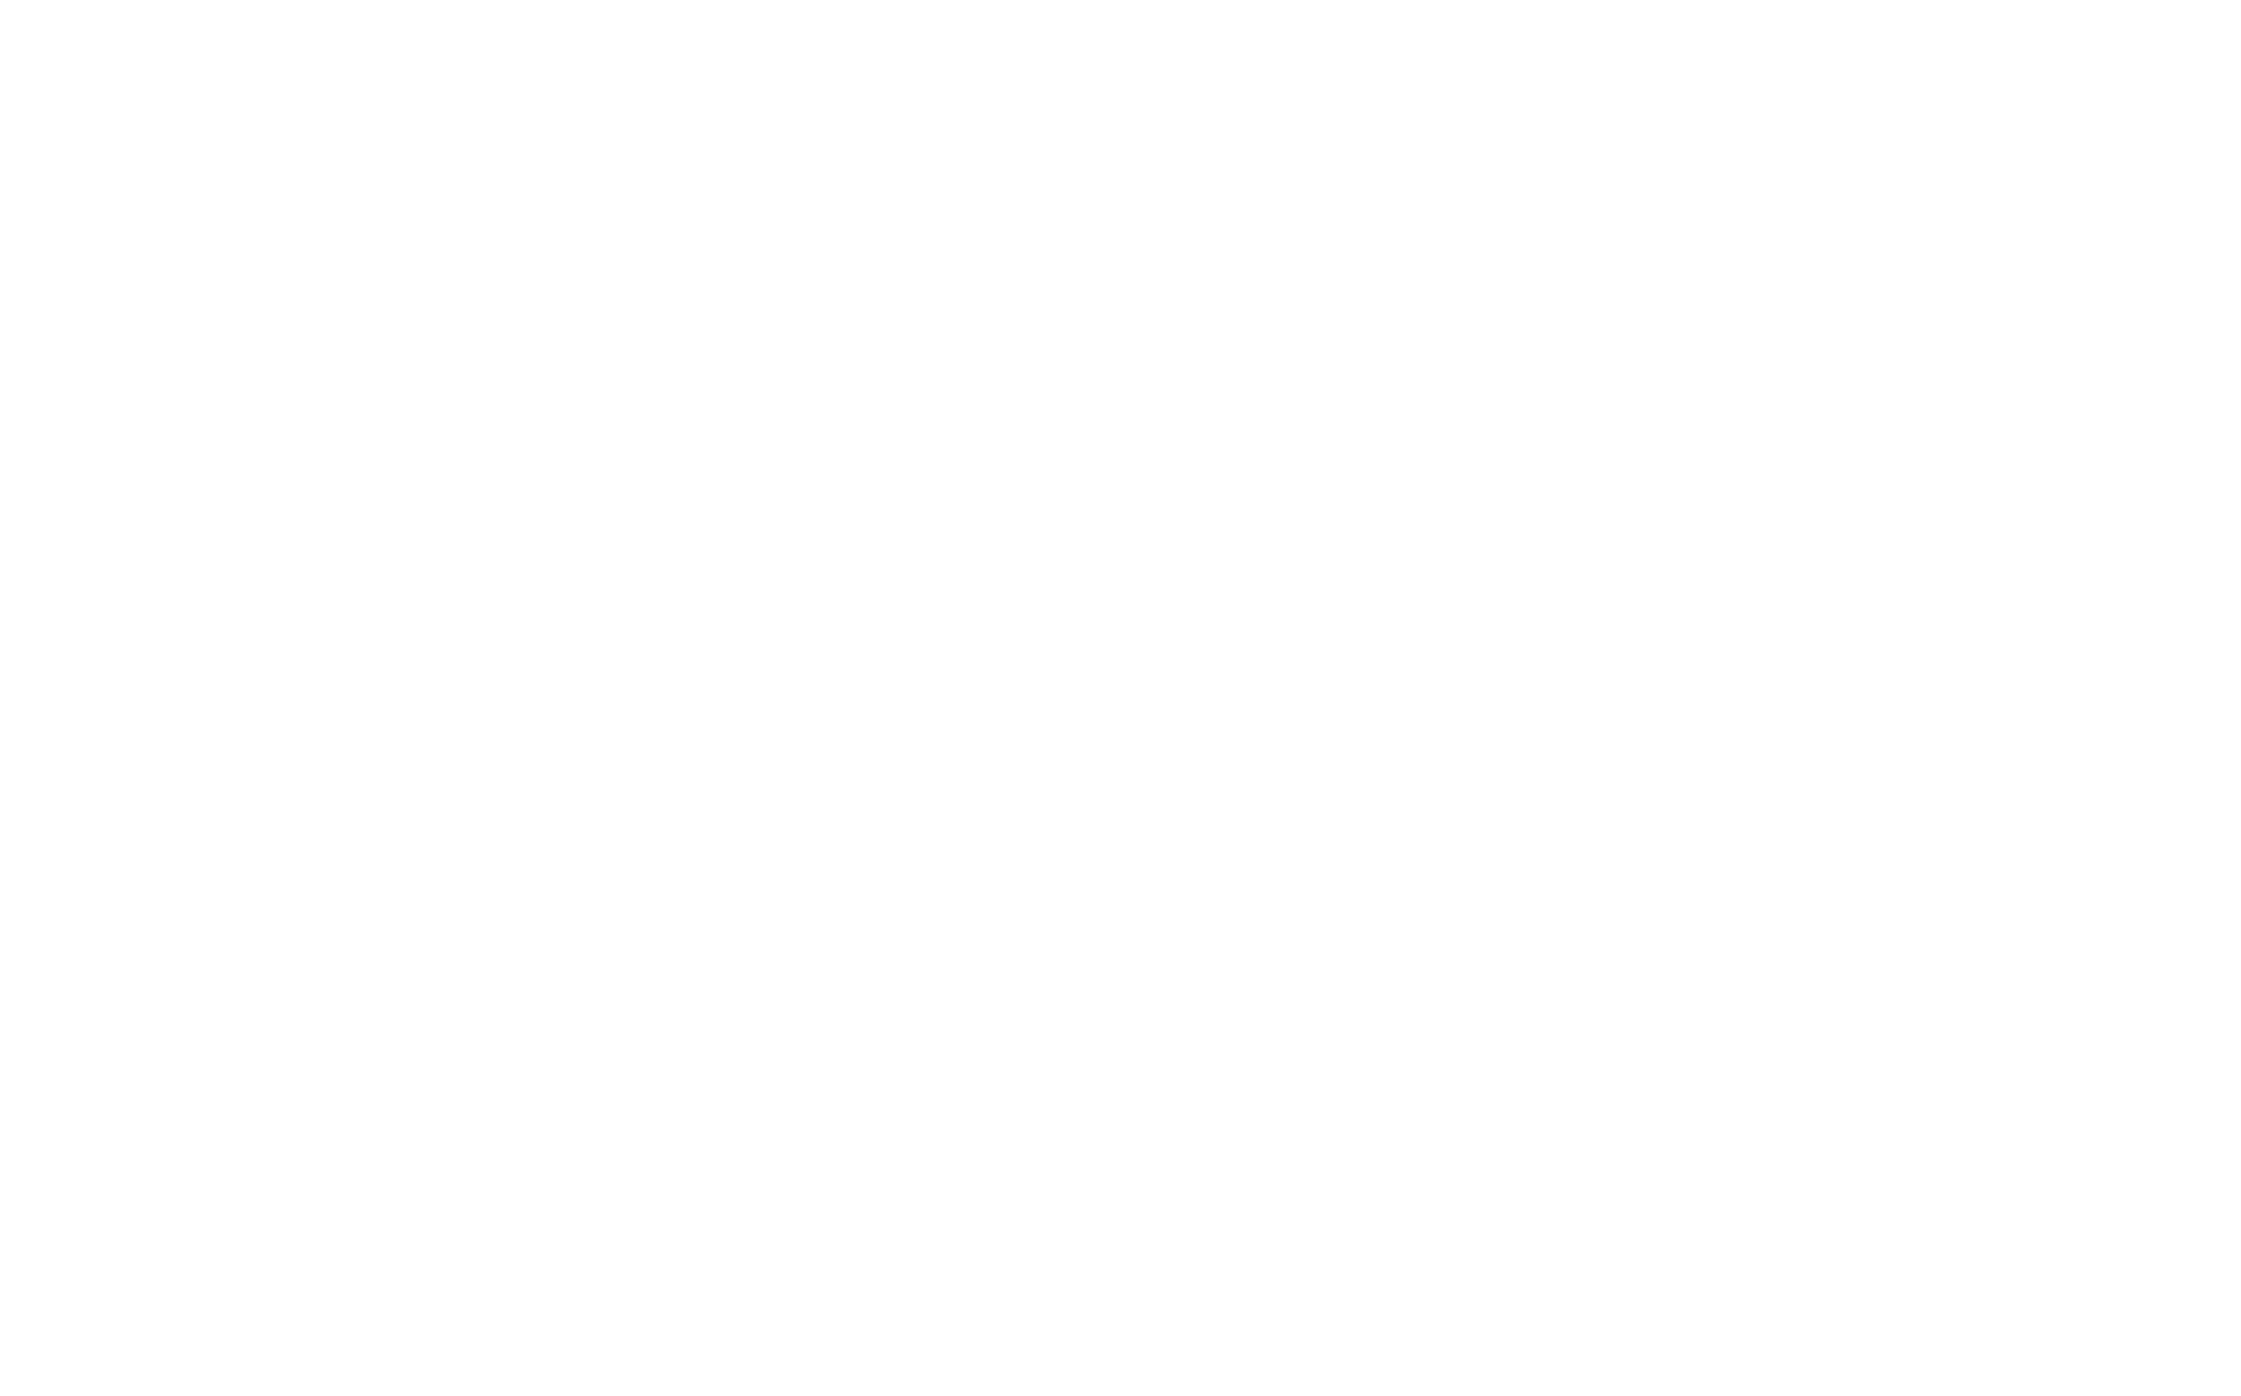 BlackIce_01